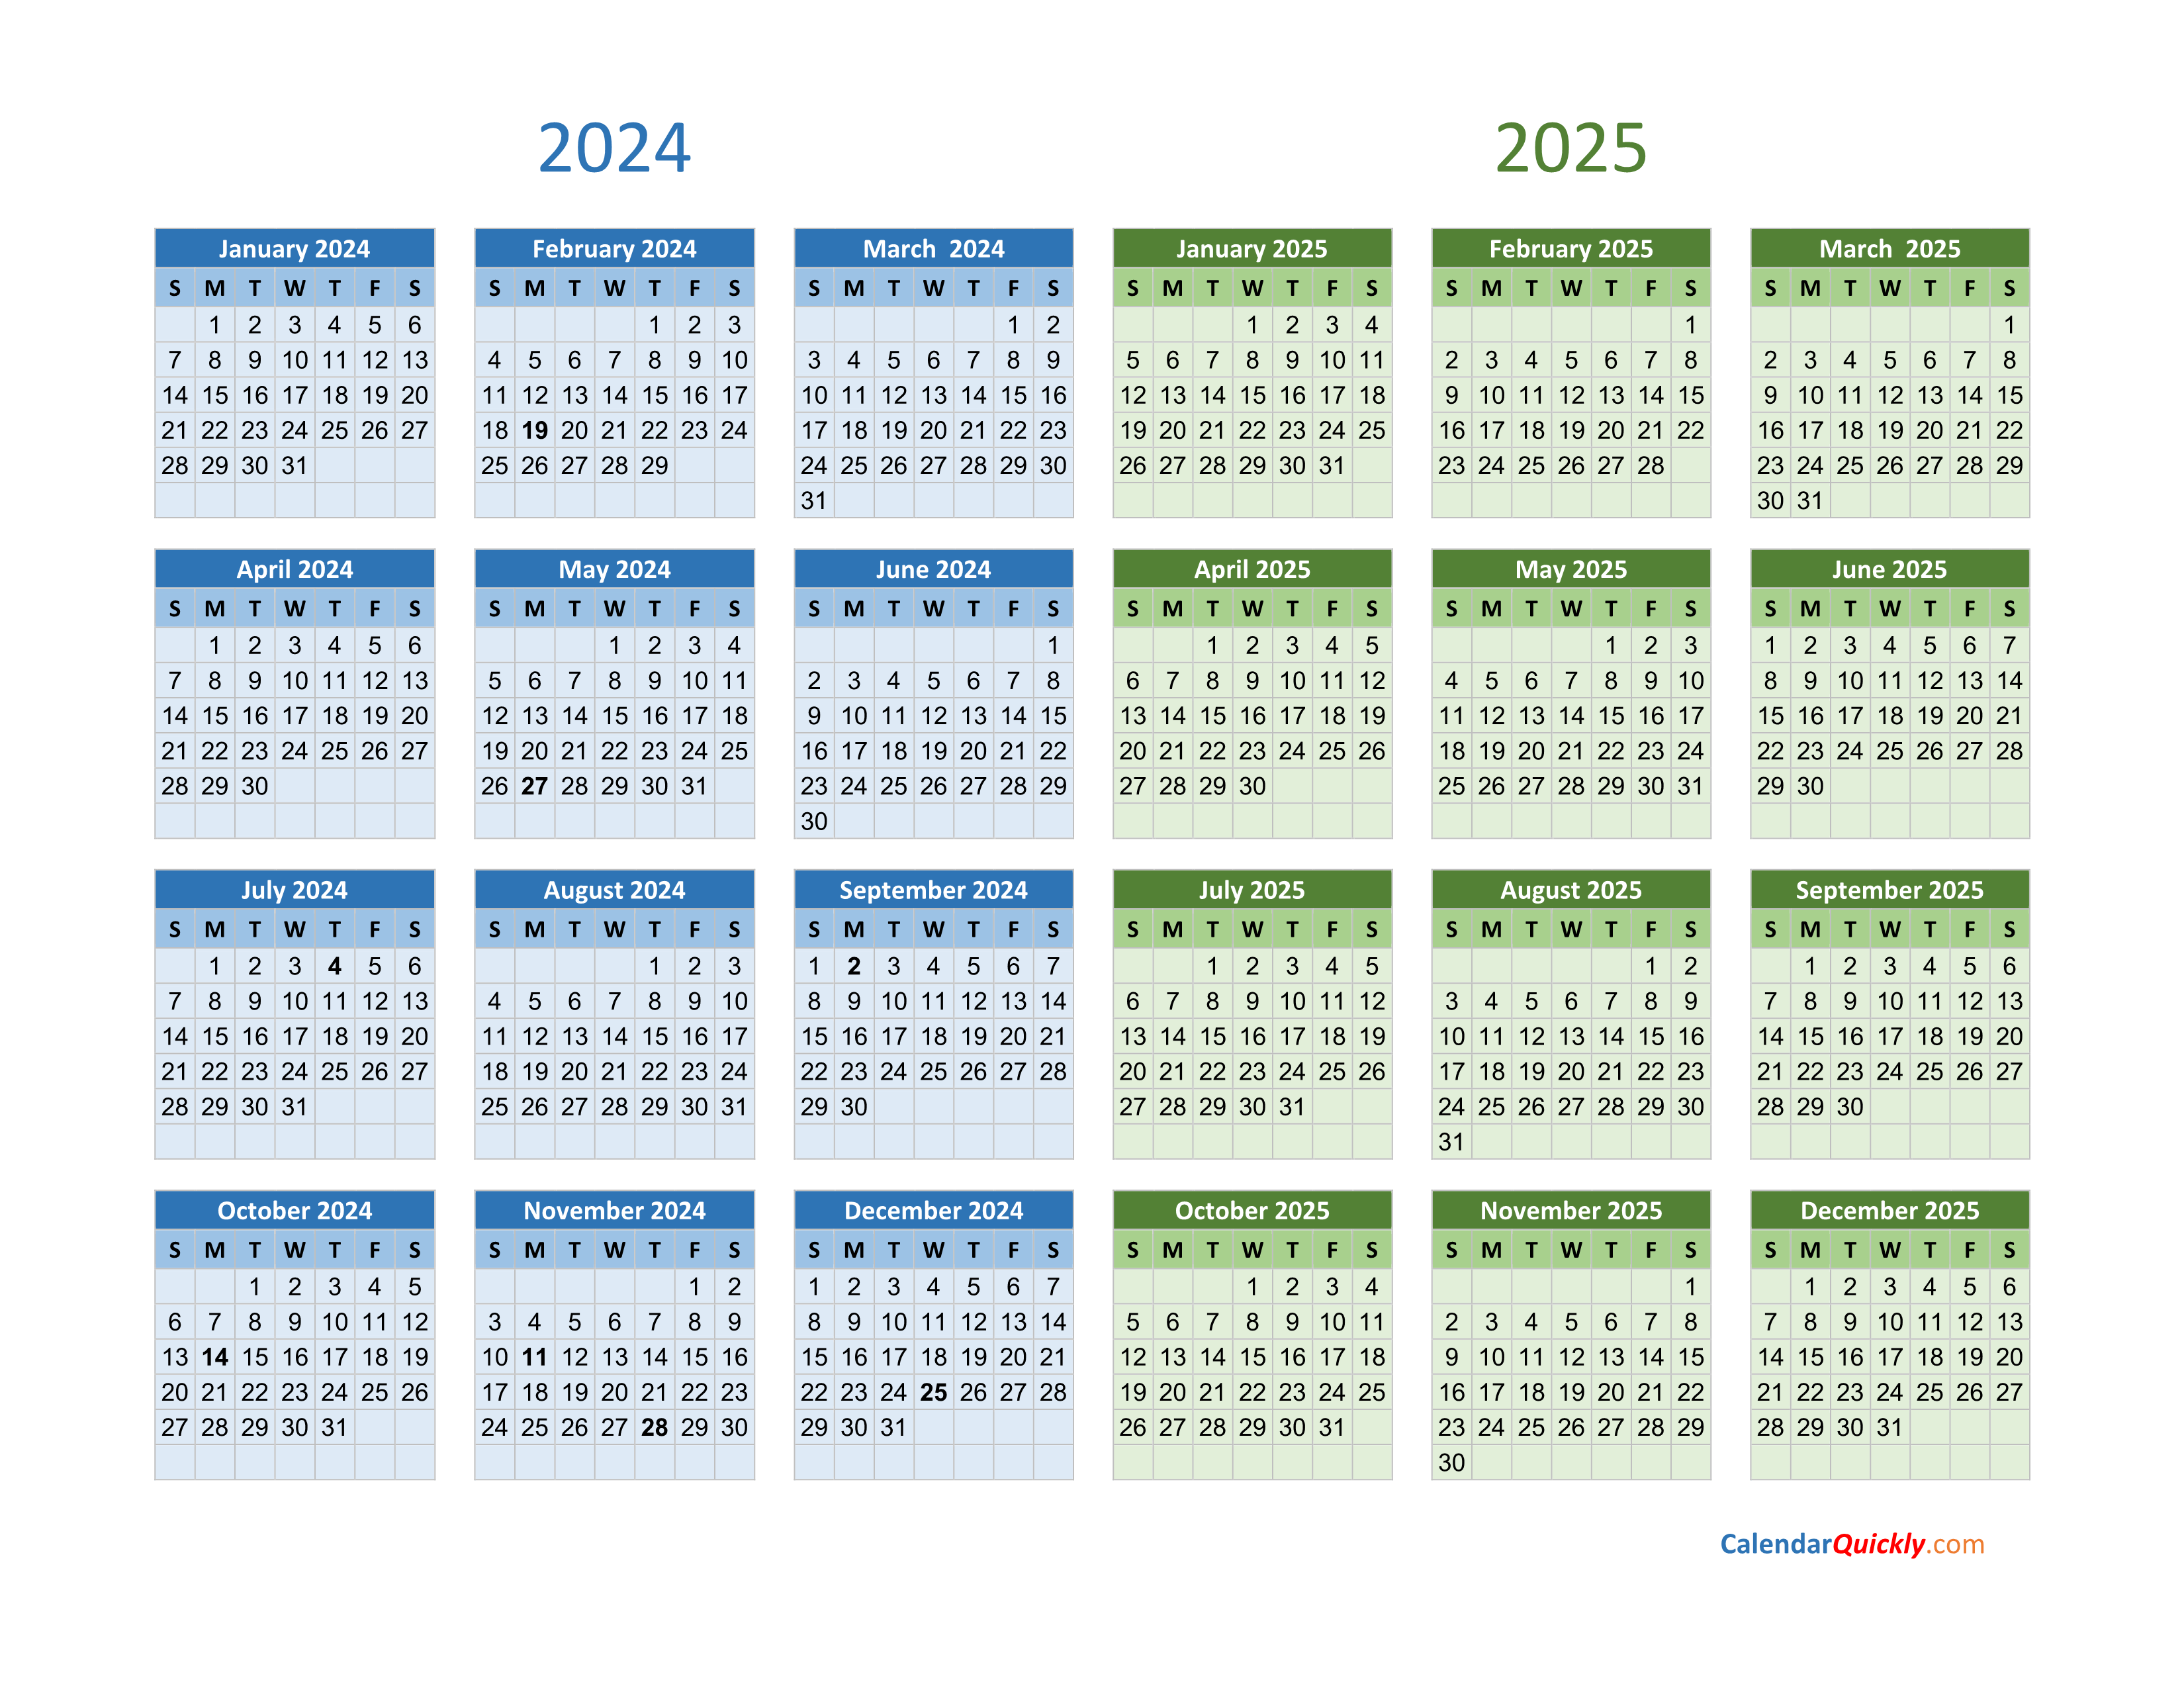 2024 and 2025 Calendar Calendar Quickly